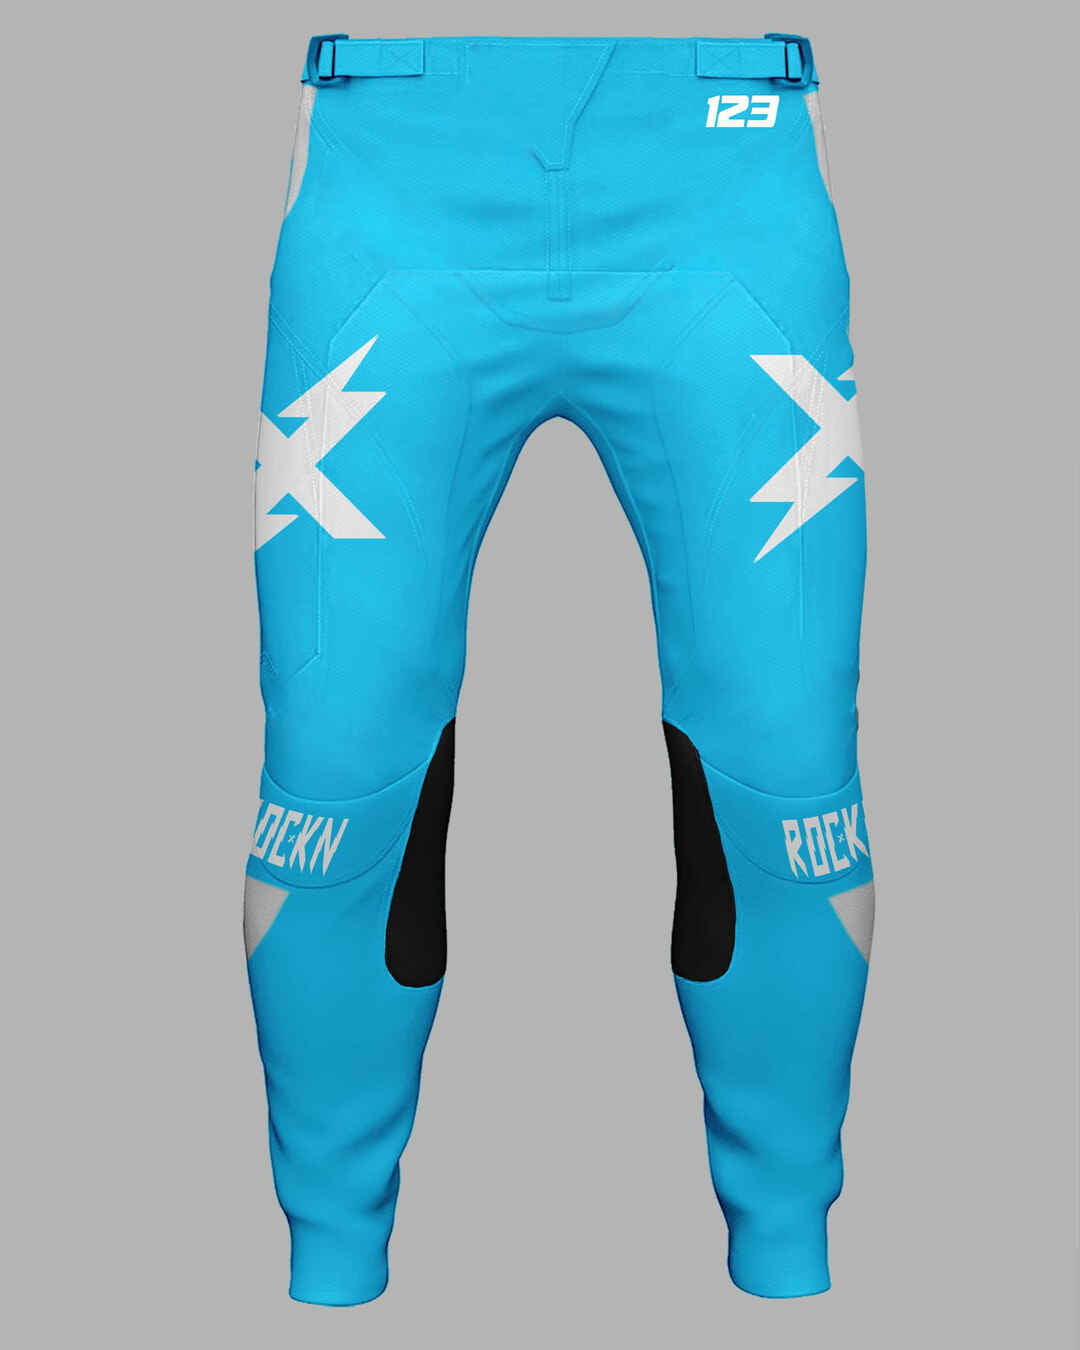 Pants OG Cyan Blue - FREE Custom Sublimation